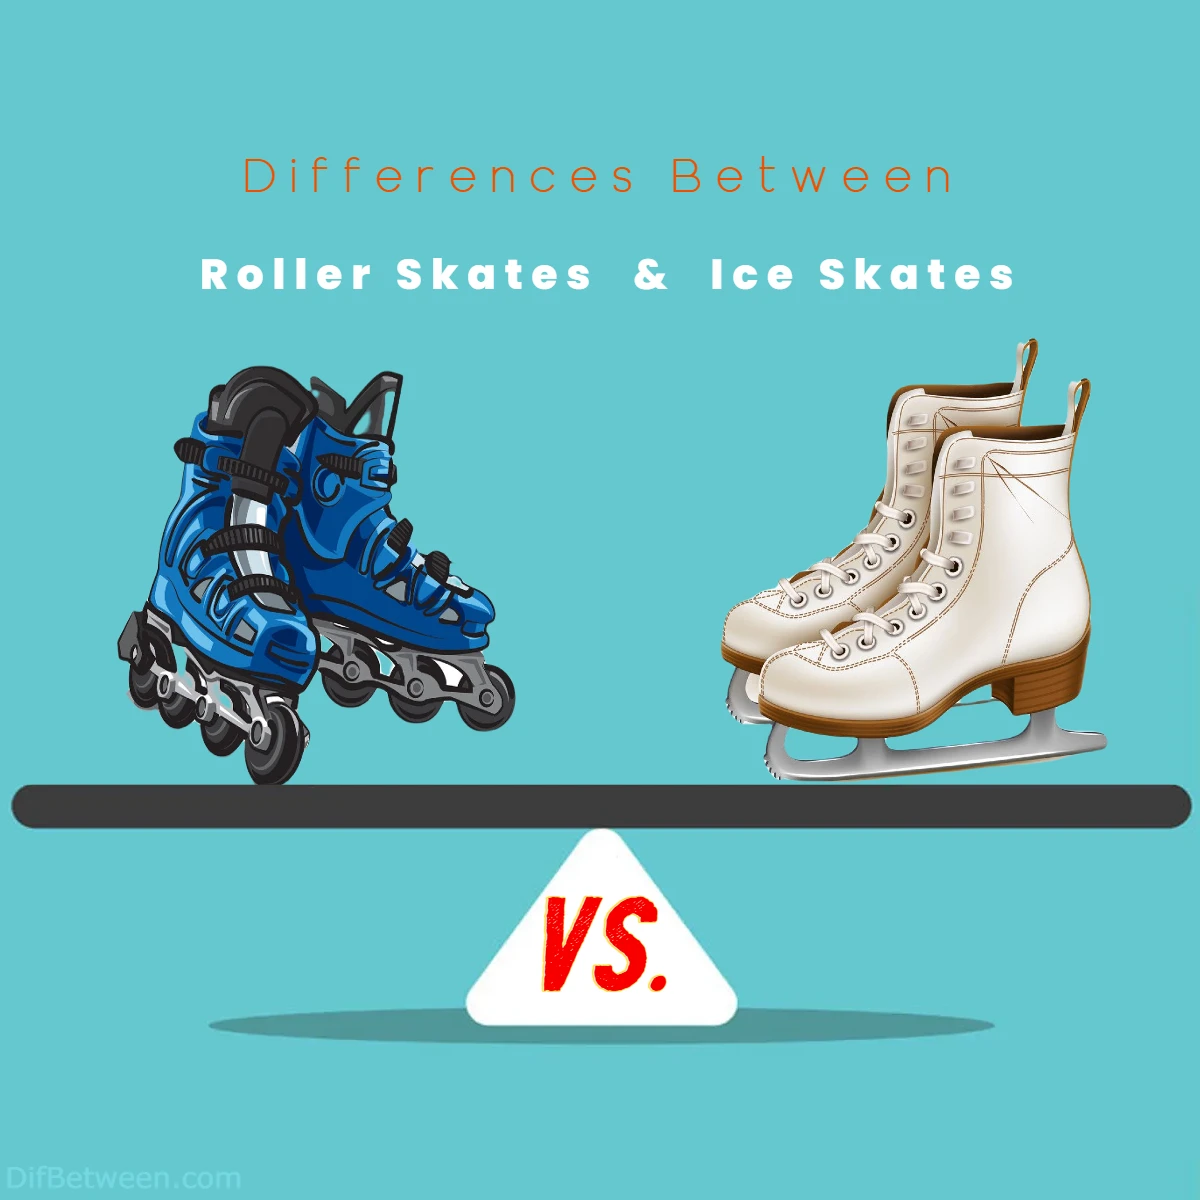 Differences Between Roller Skates vs Ice Skates